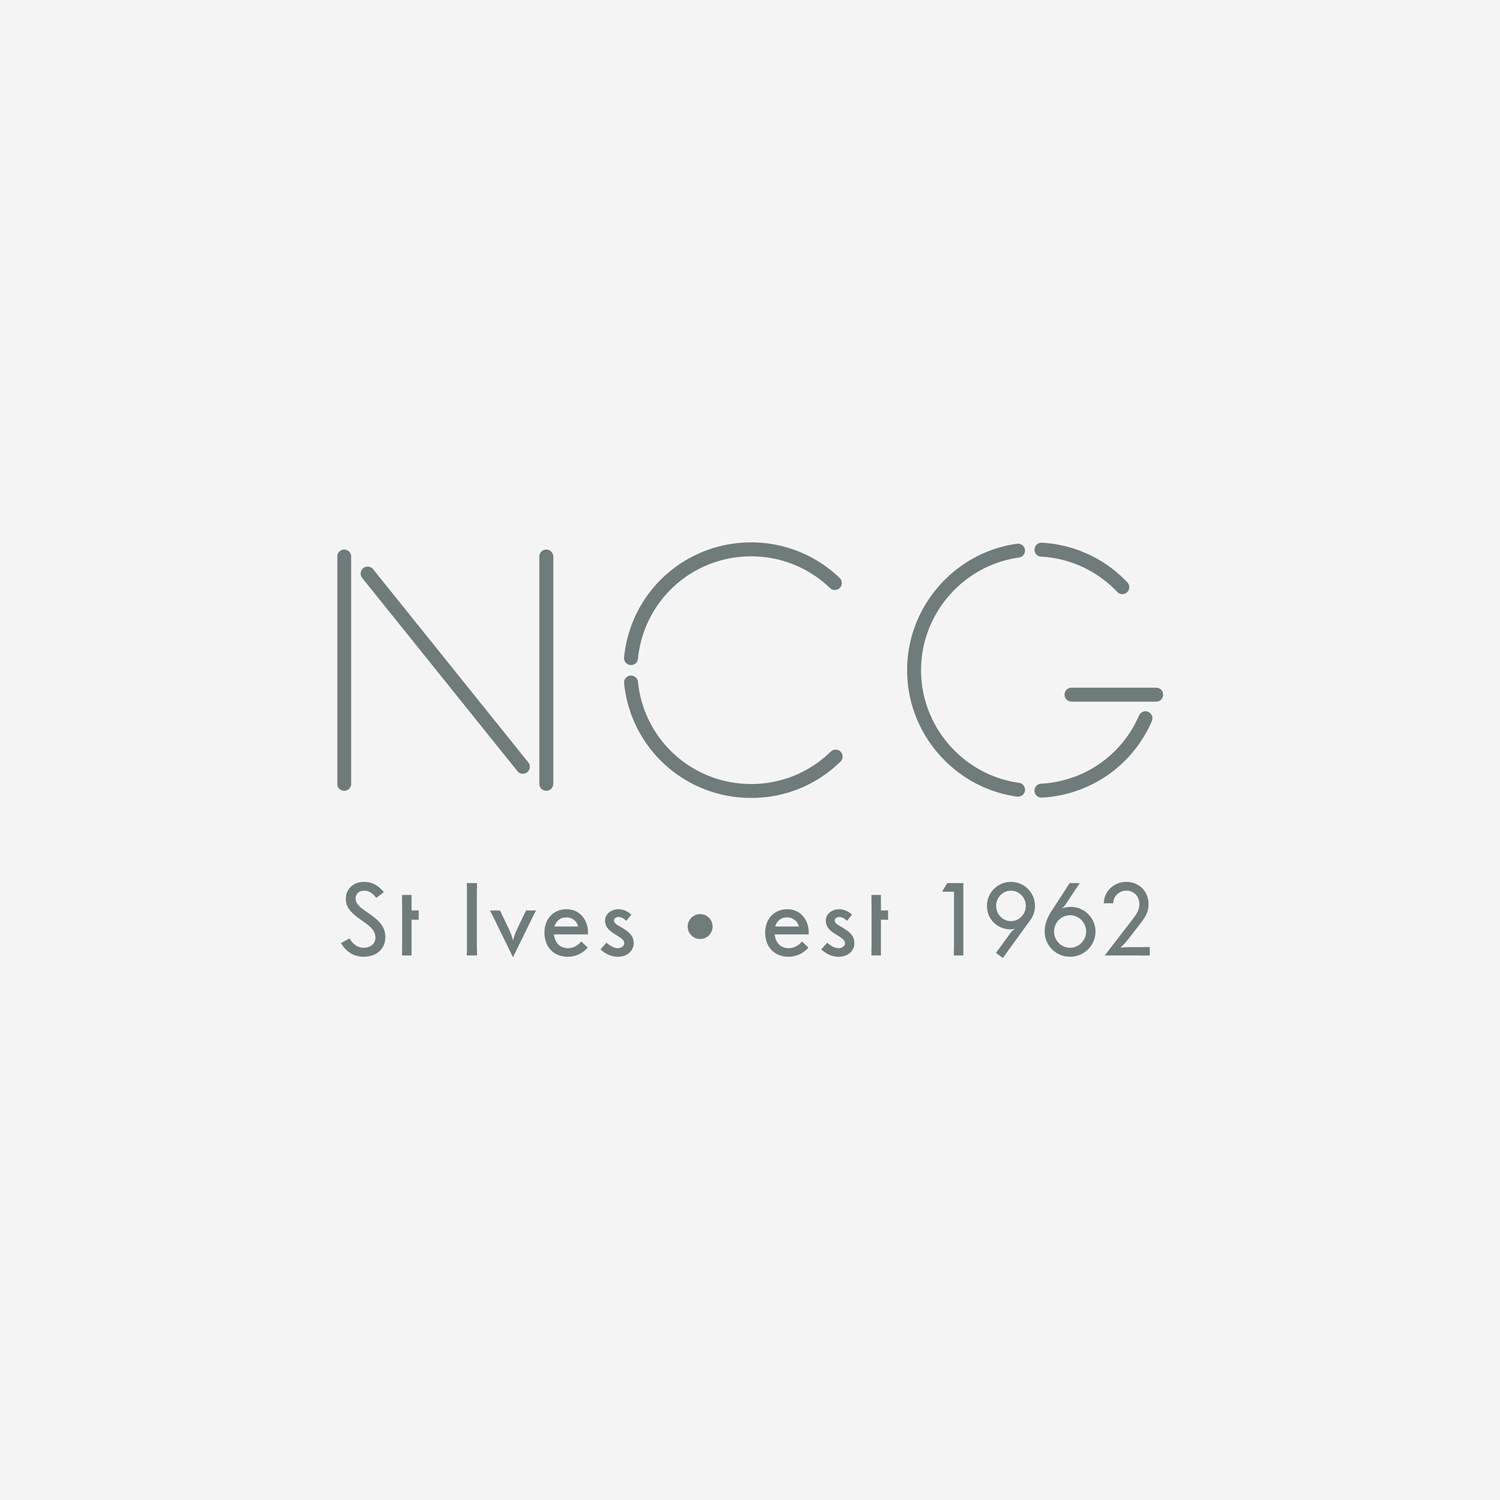 S Q Logo - Meor Studio Ncg Sq Logo On Grey2 Design Agency, St Ives